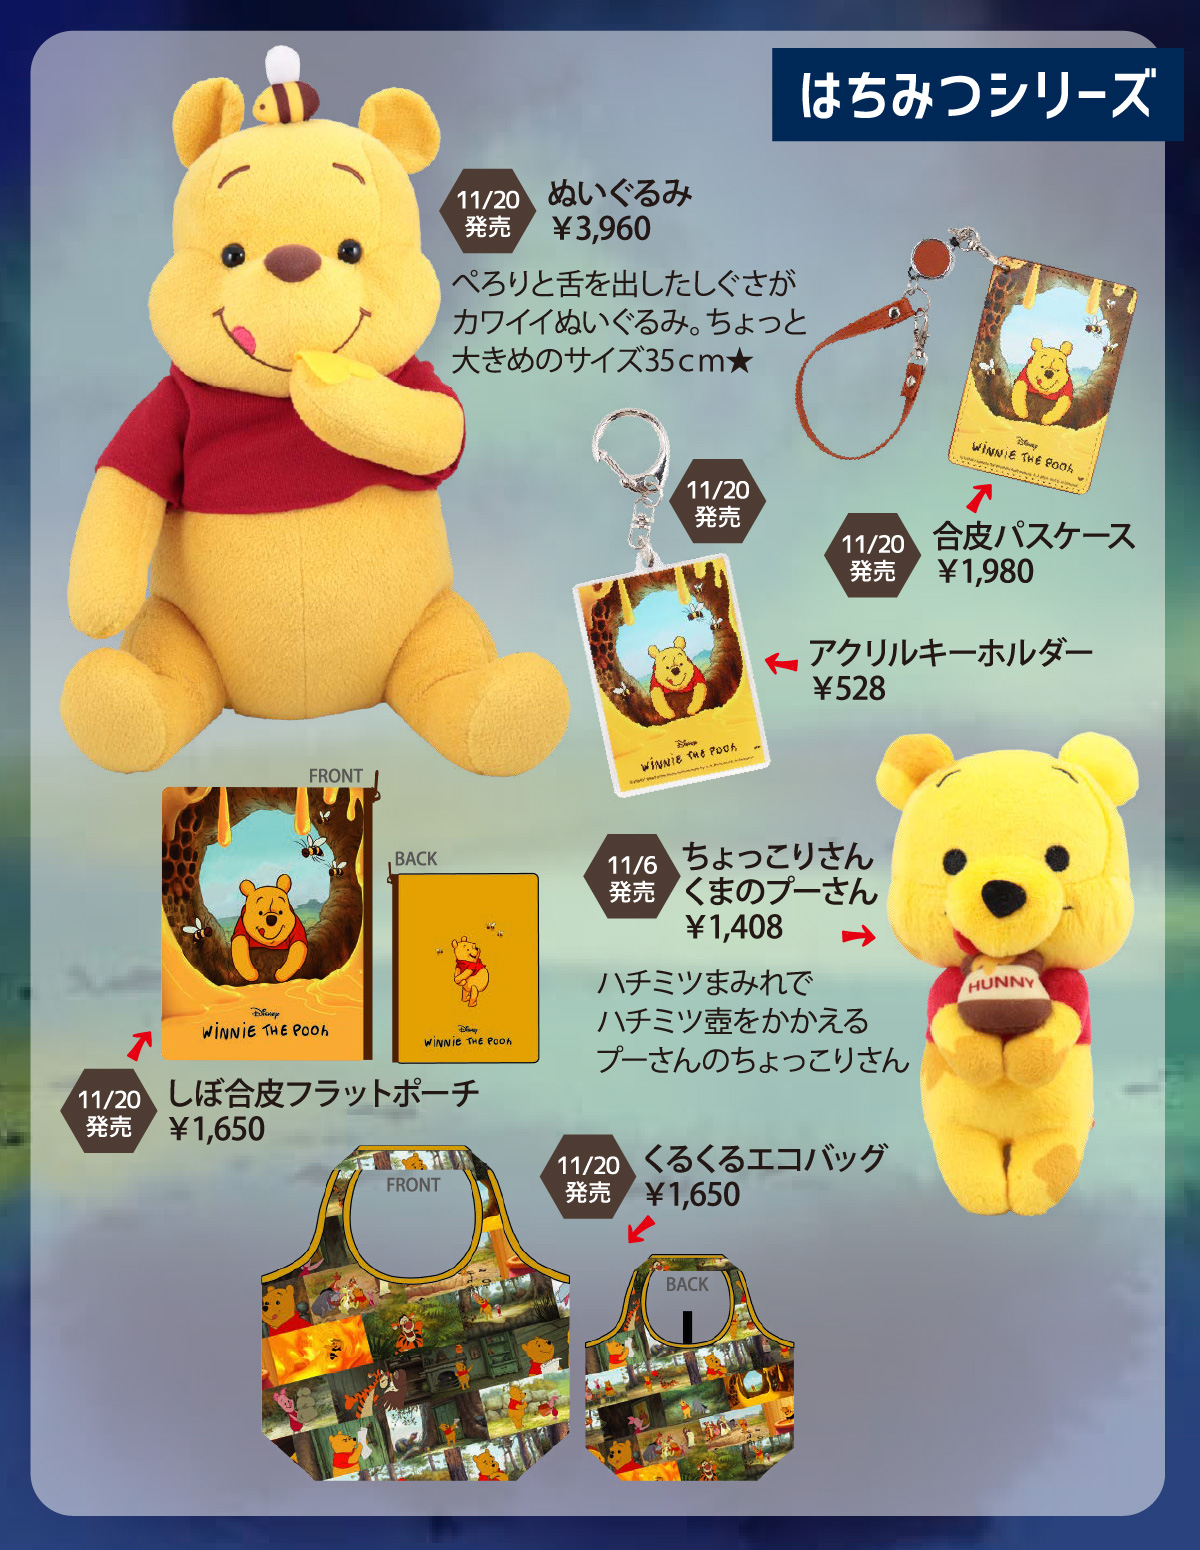 Original Goods Winnie The Pooh Hunny S Cafe In Strange Dreams テラスモール湘南店 有隣堂